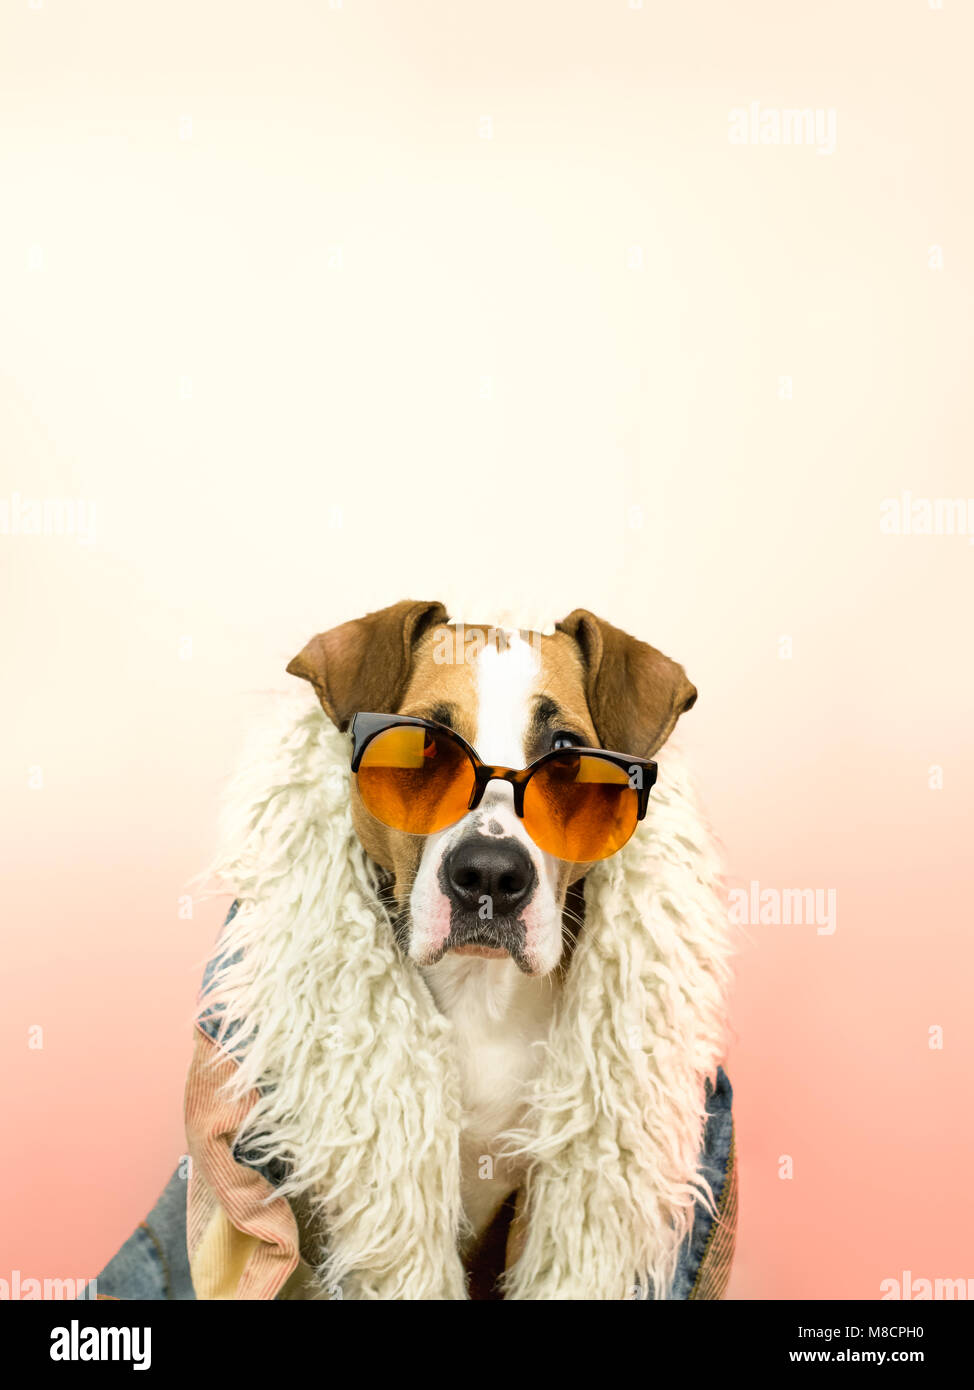 Next doggo portrait. @hutchosgsps sat like a rock star, Thankyou